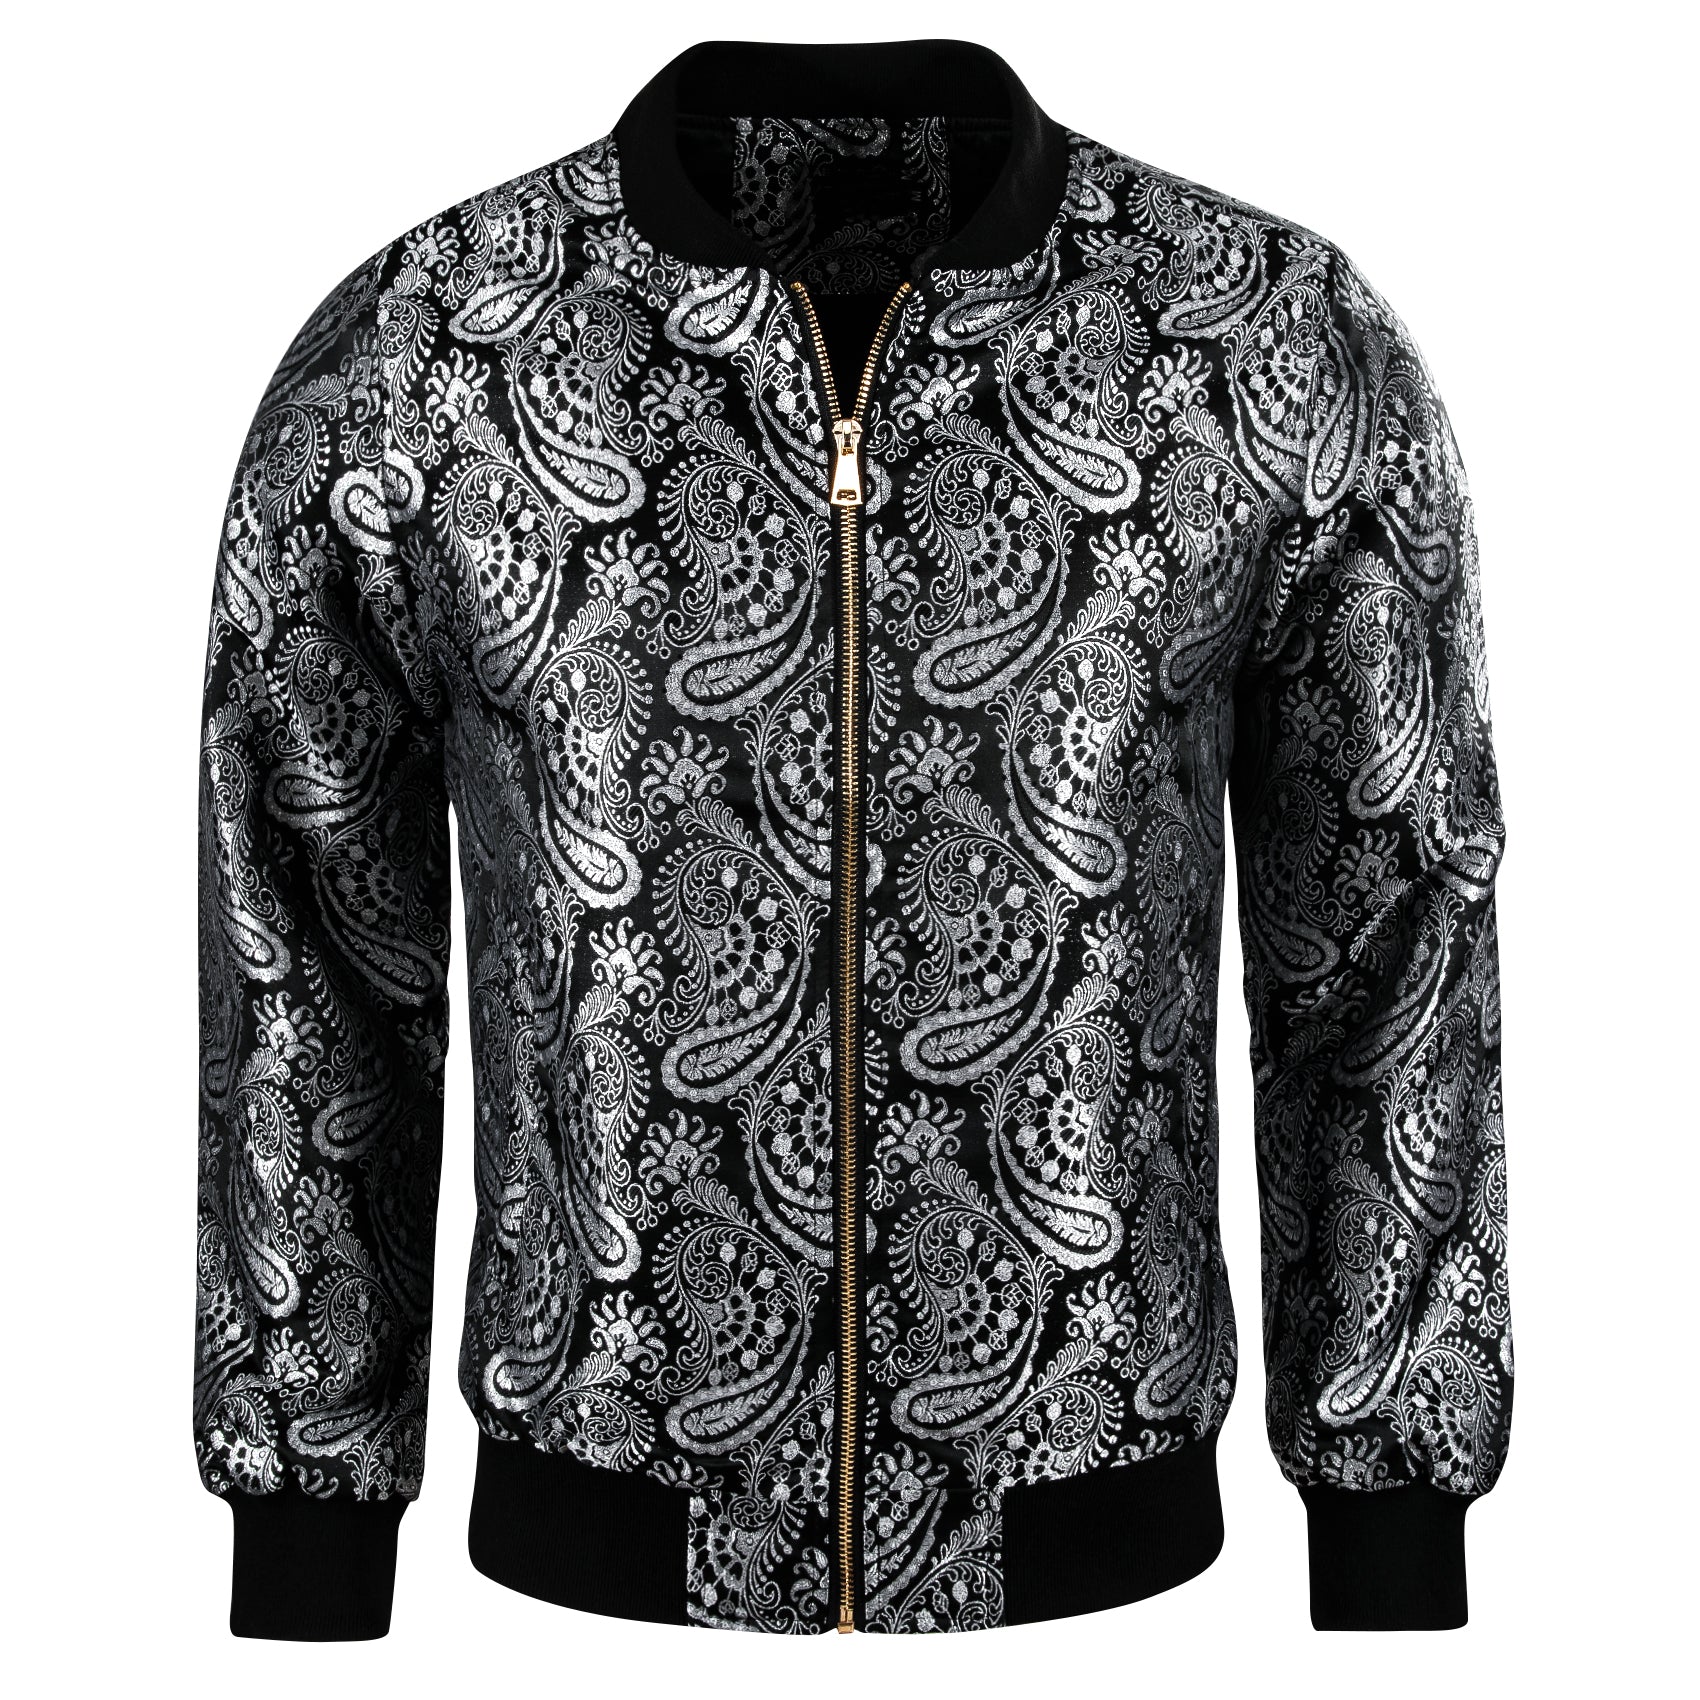 Mens Black Silver Floral Jacquard Paisley Jacket